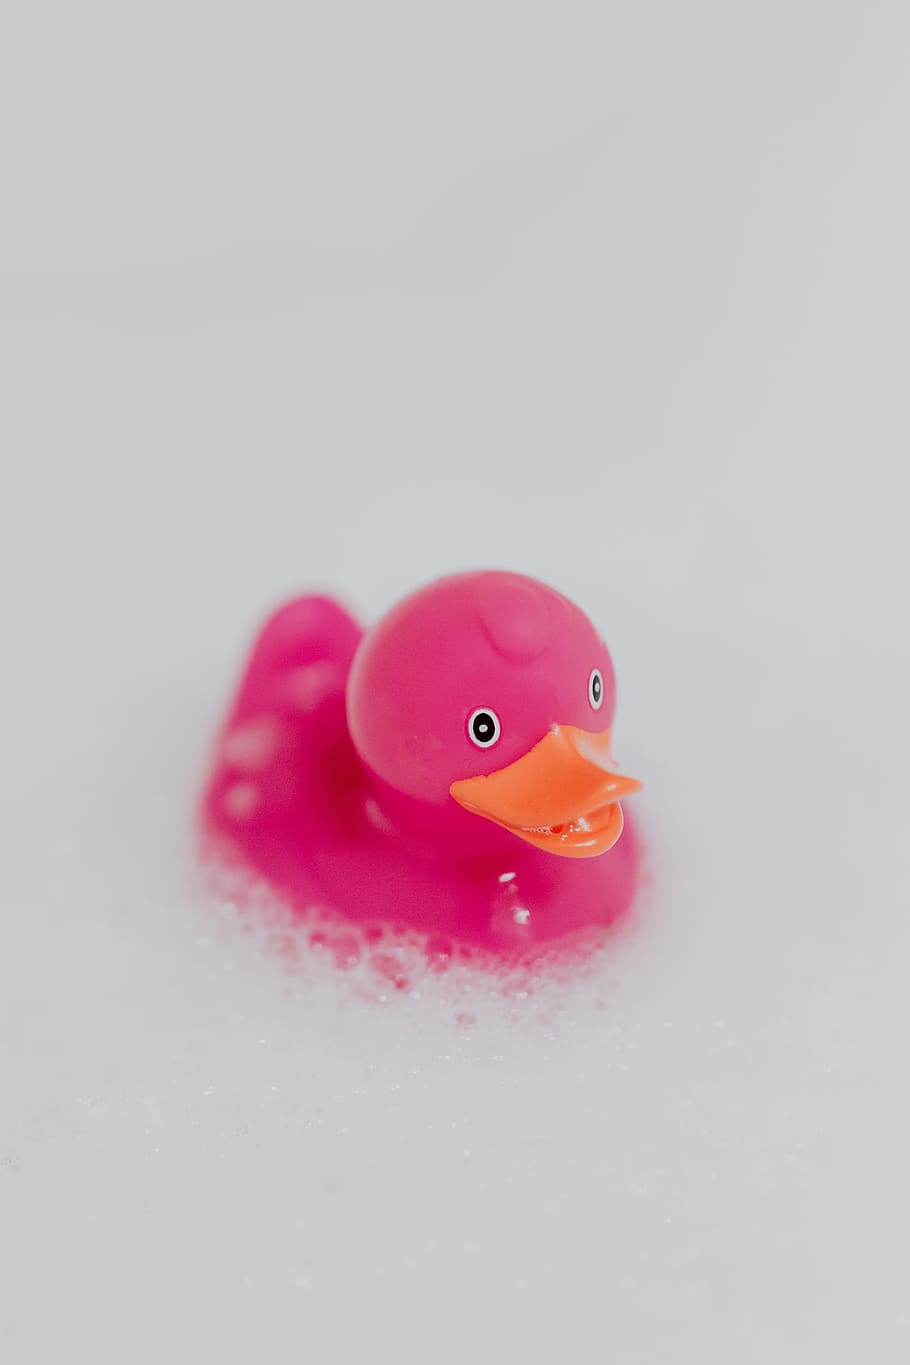 Pink rubber ducky in foam, pink duck, soap bubbles, toy, rubber toy